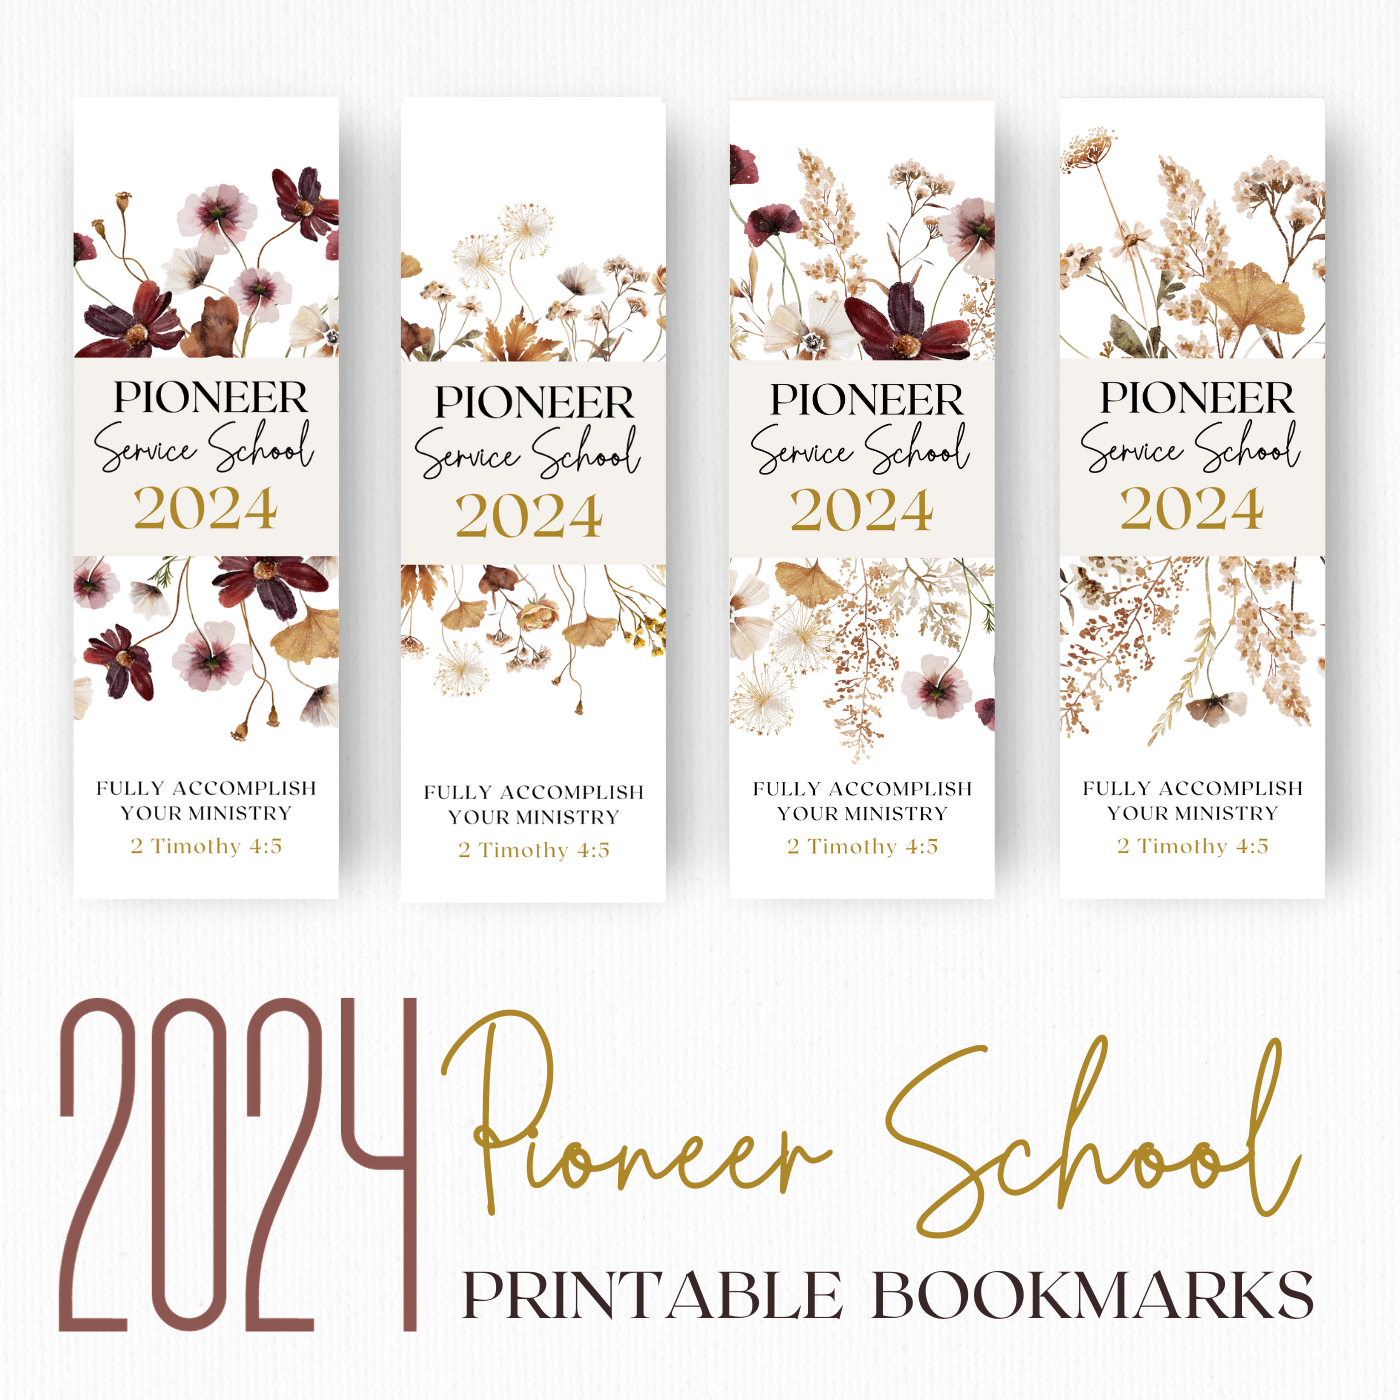 JW bookmark, Pioneer Service School 2024, JW Gifts